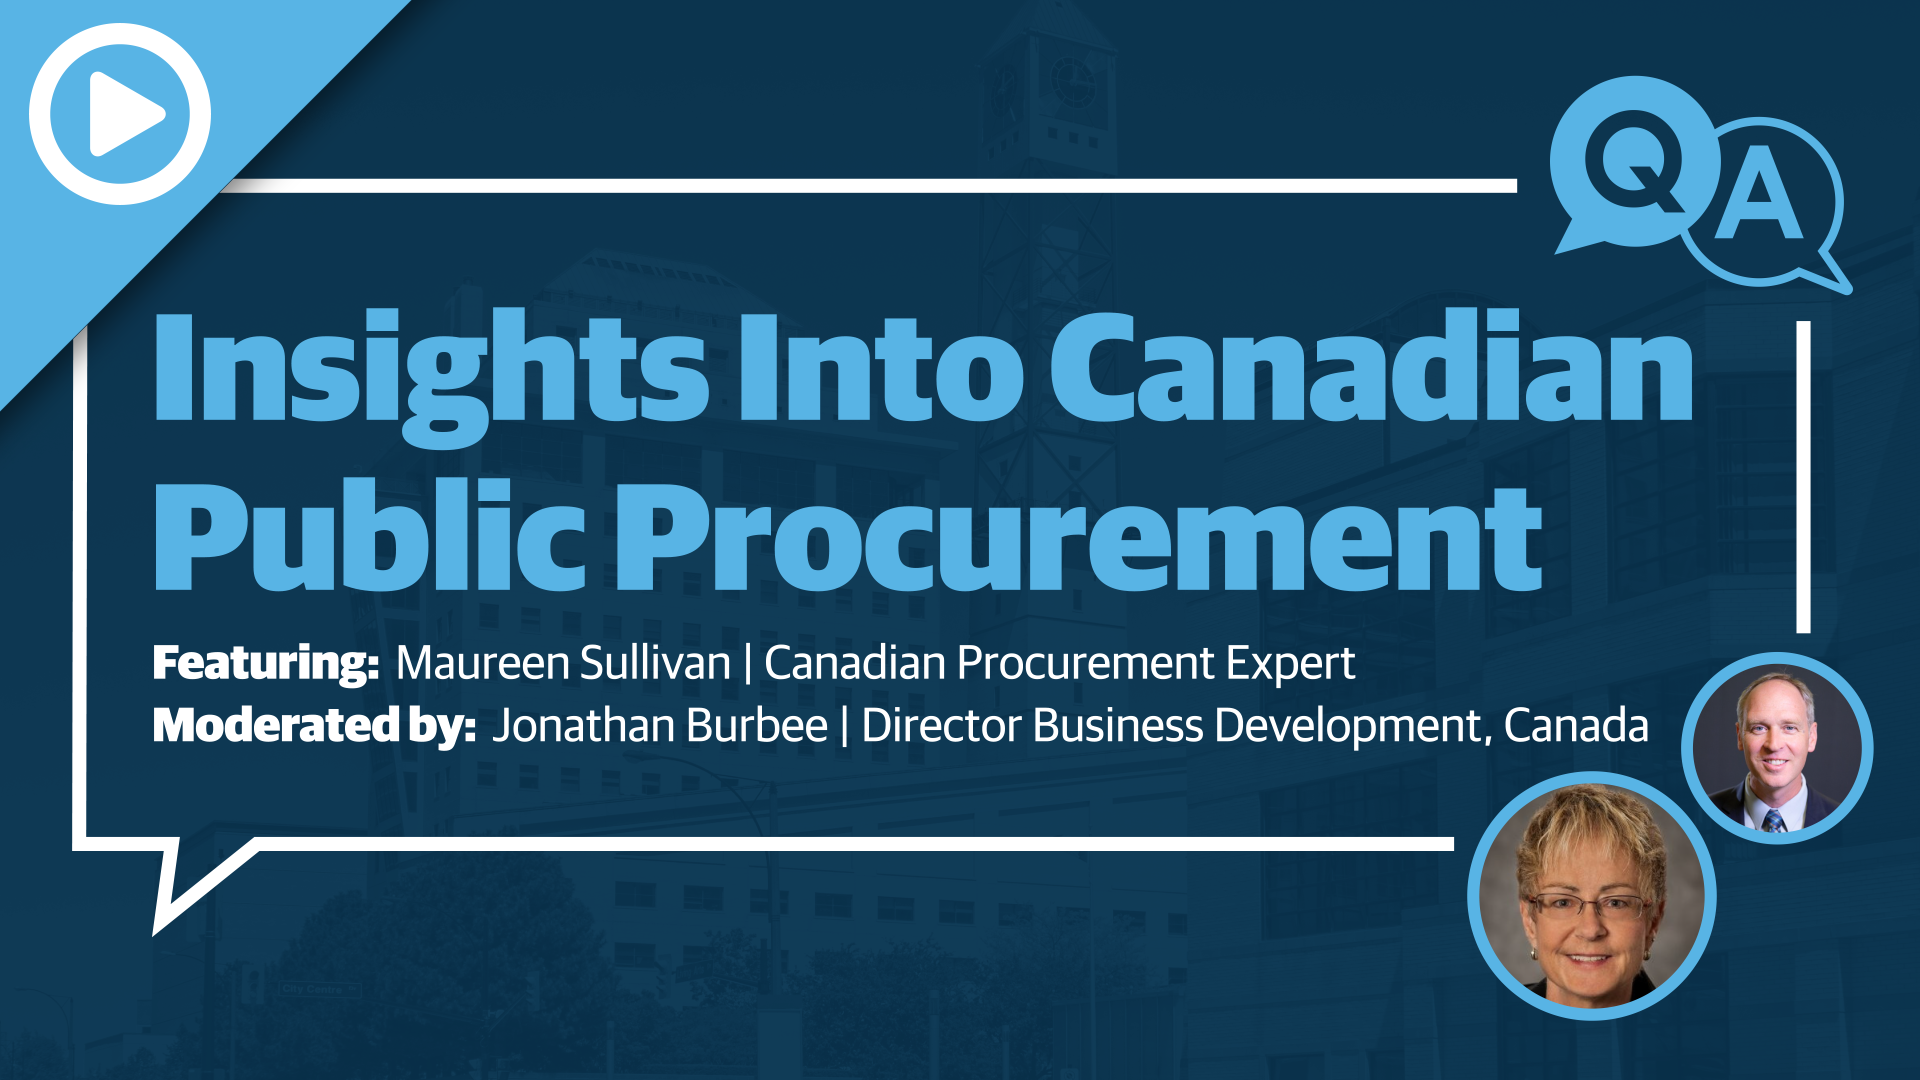 Insights Into Canadian Public Procurement with Maureen Sullivan